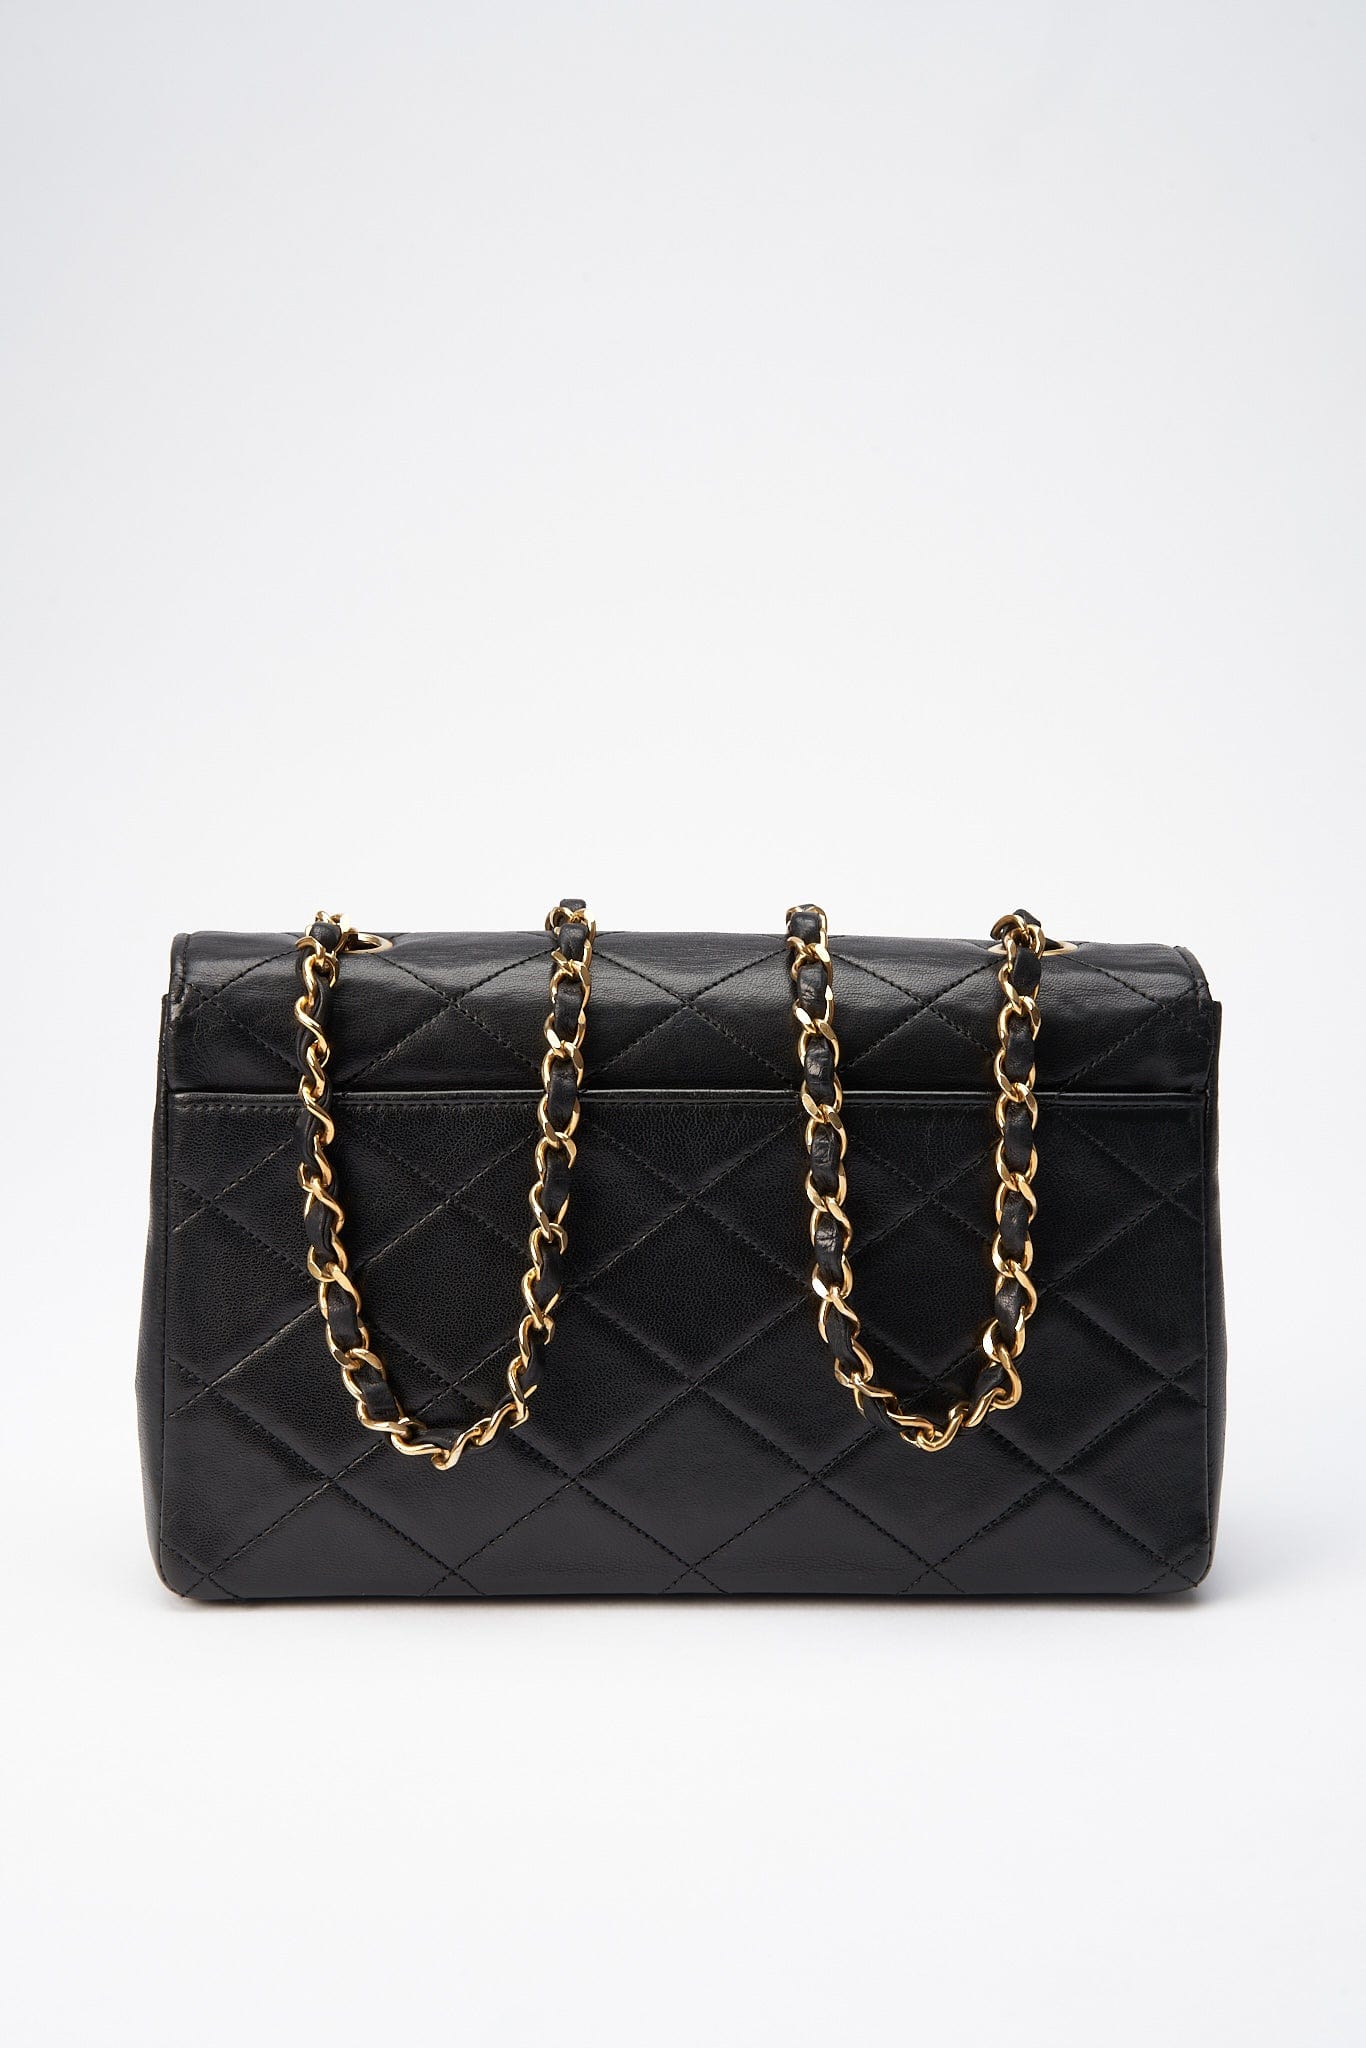 Chanel Black Leather CC Wallet Entrupy Authenticated